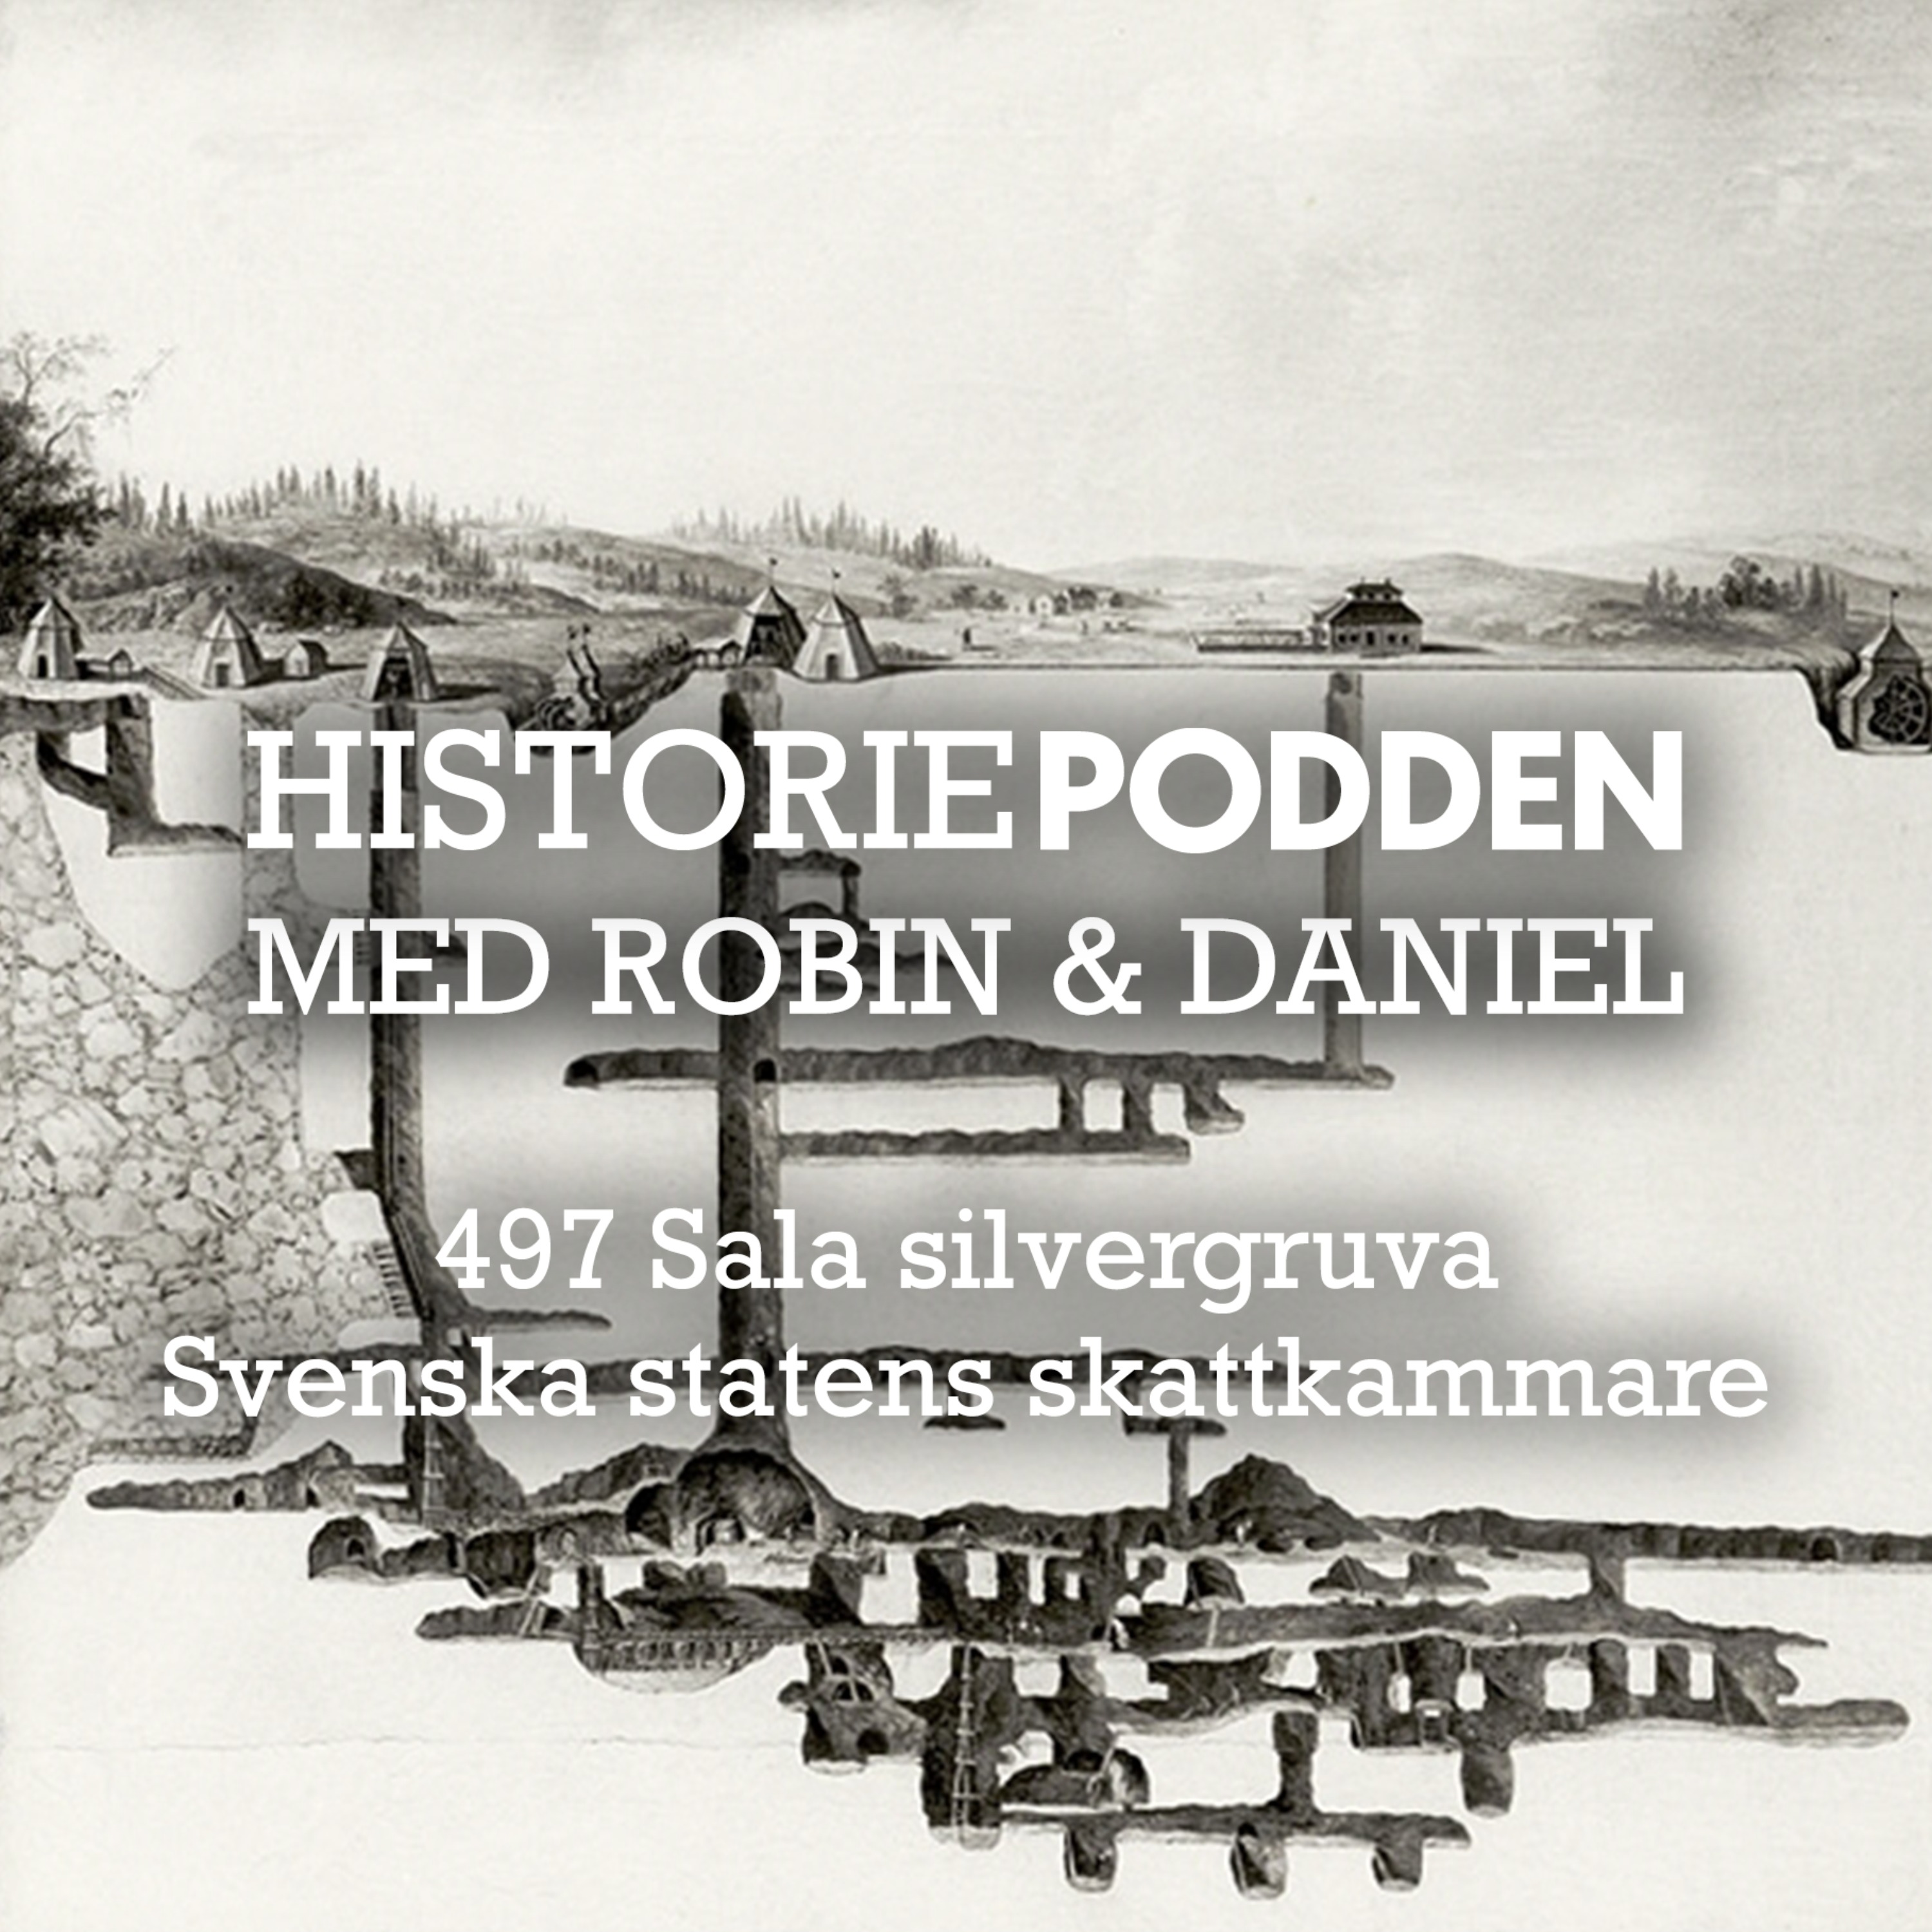 497. Sala silvergruva: Svenska statens skattkista